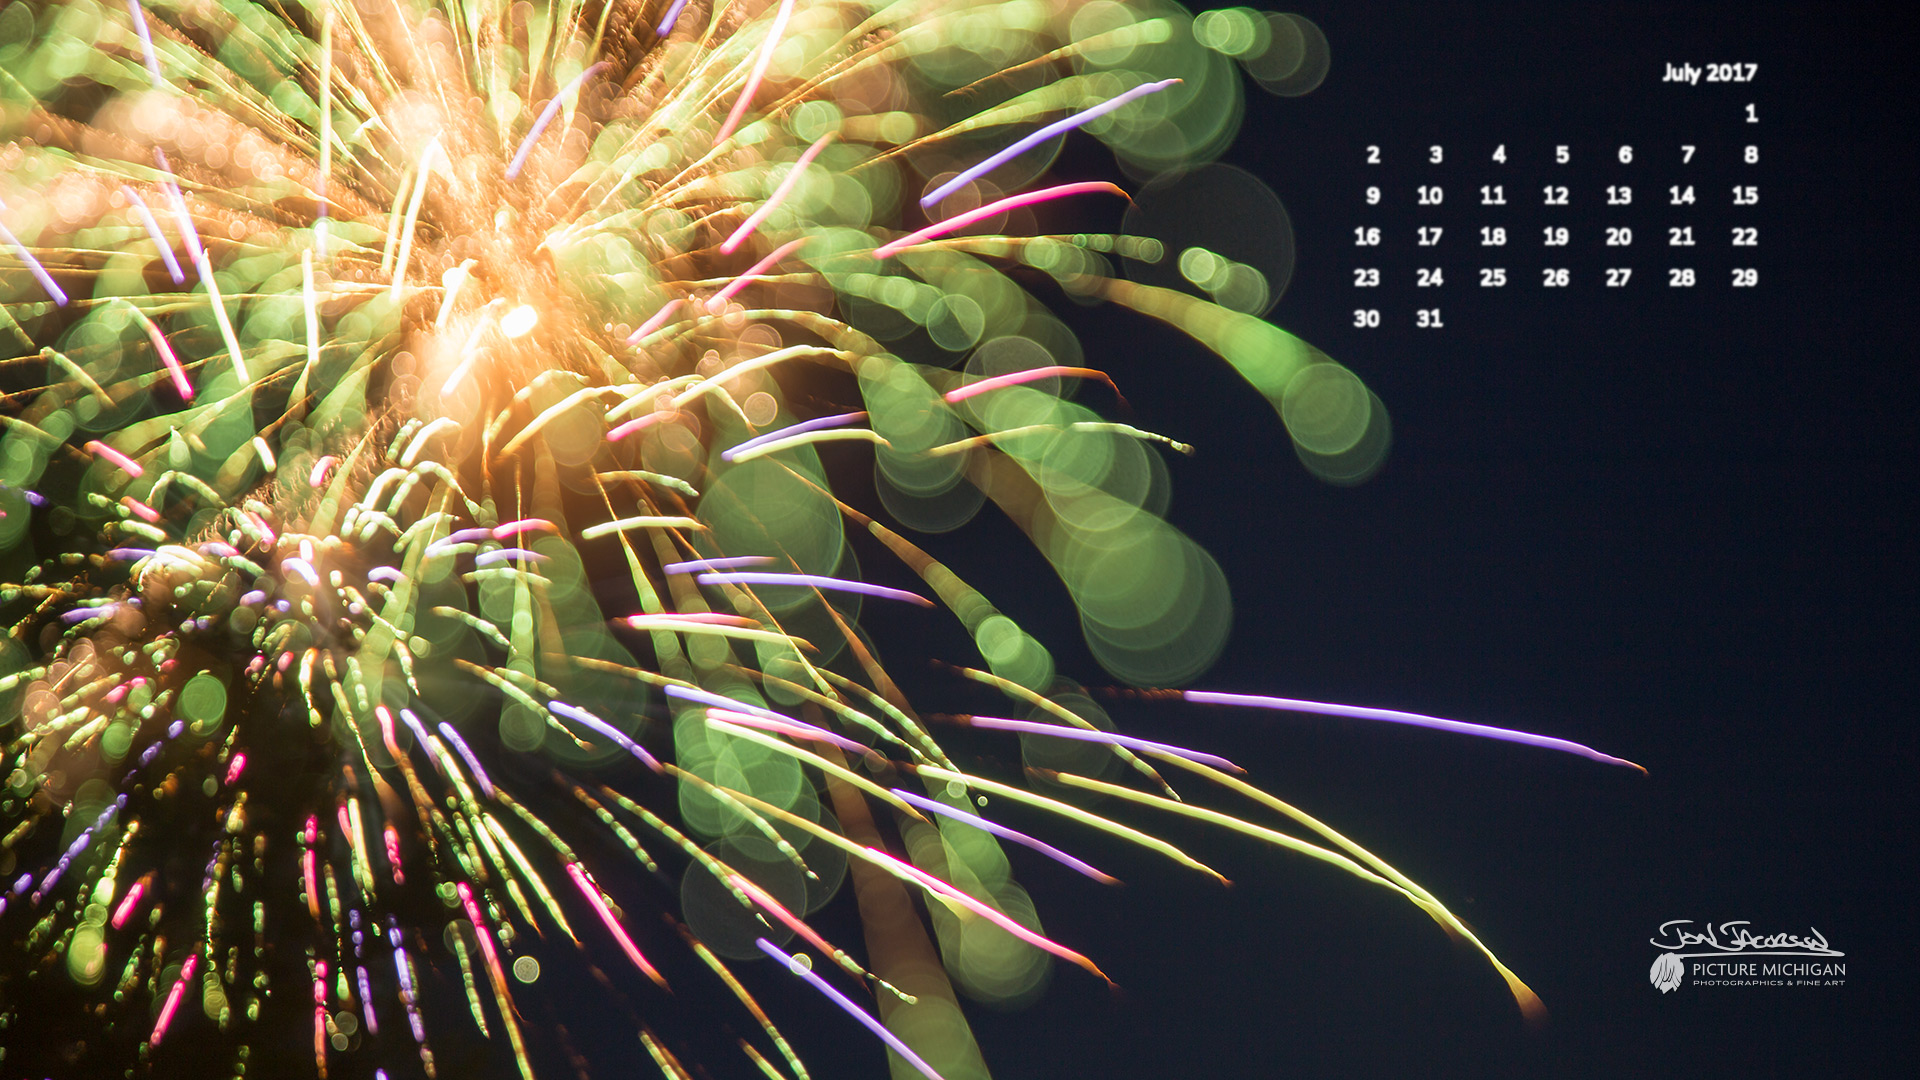 july-2017-calendar-desktop-wallpaper-fireworks-picture-michigan